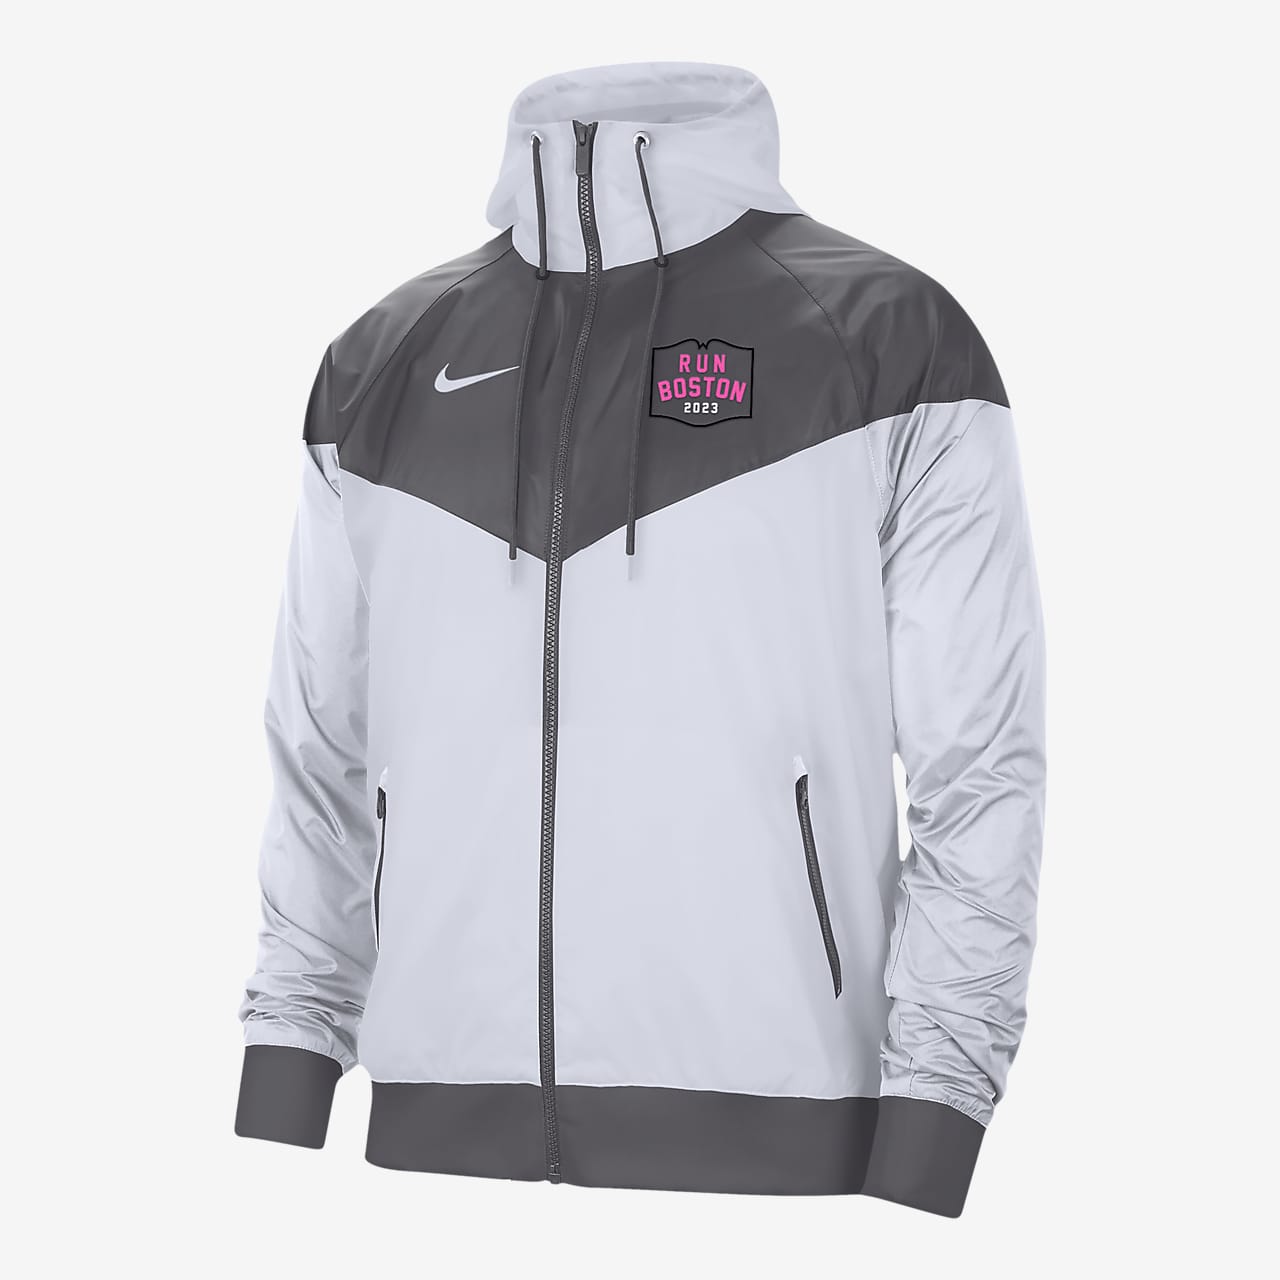 Men's Jacket. Nike.com